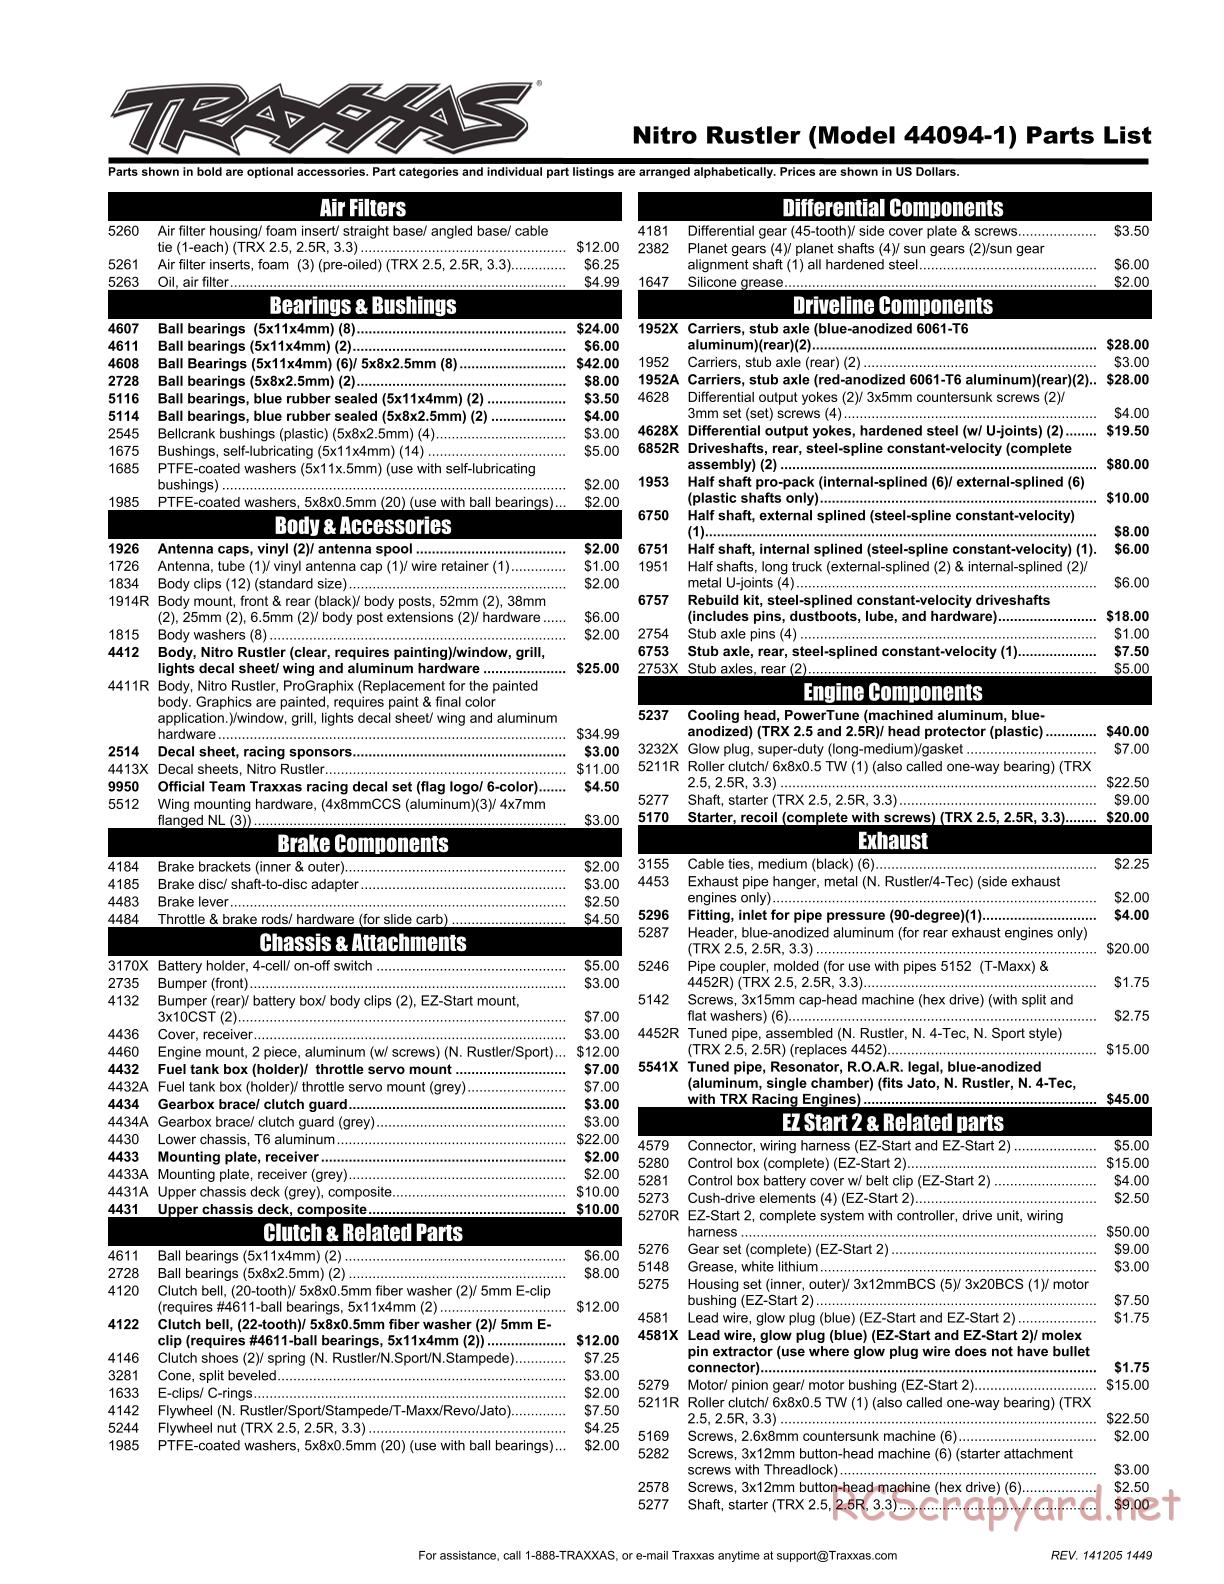 Traxxas - Nitro Rustler (2015) - Parts List - Page 1